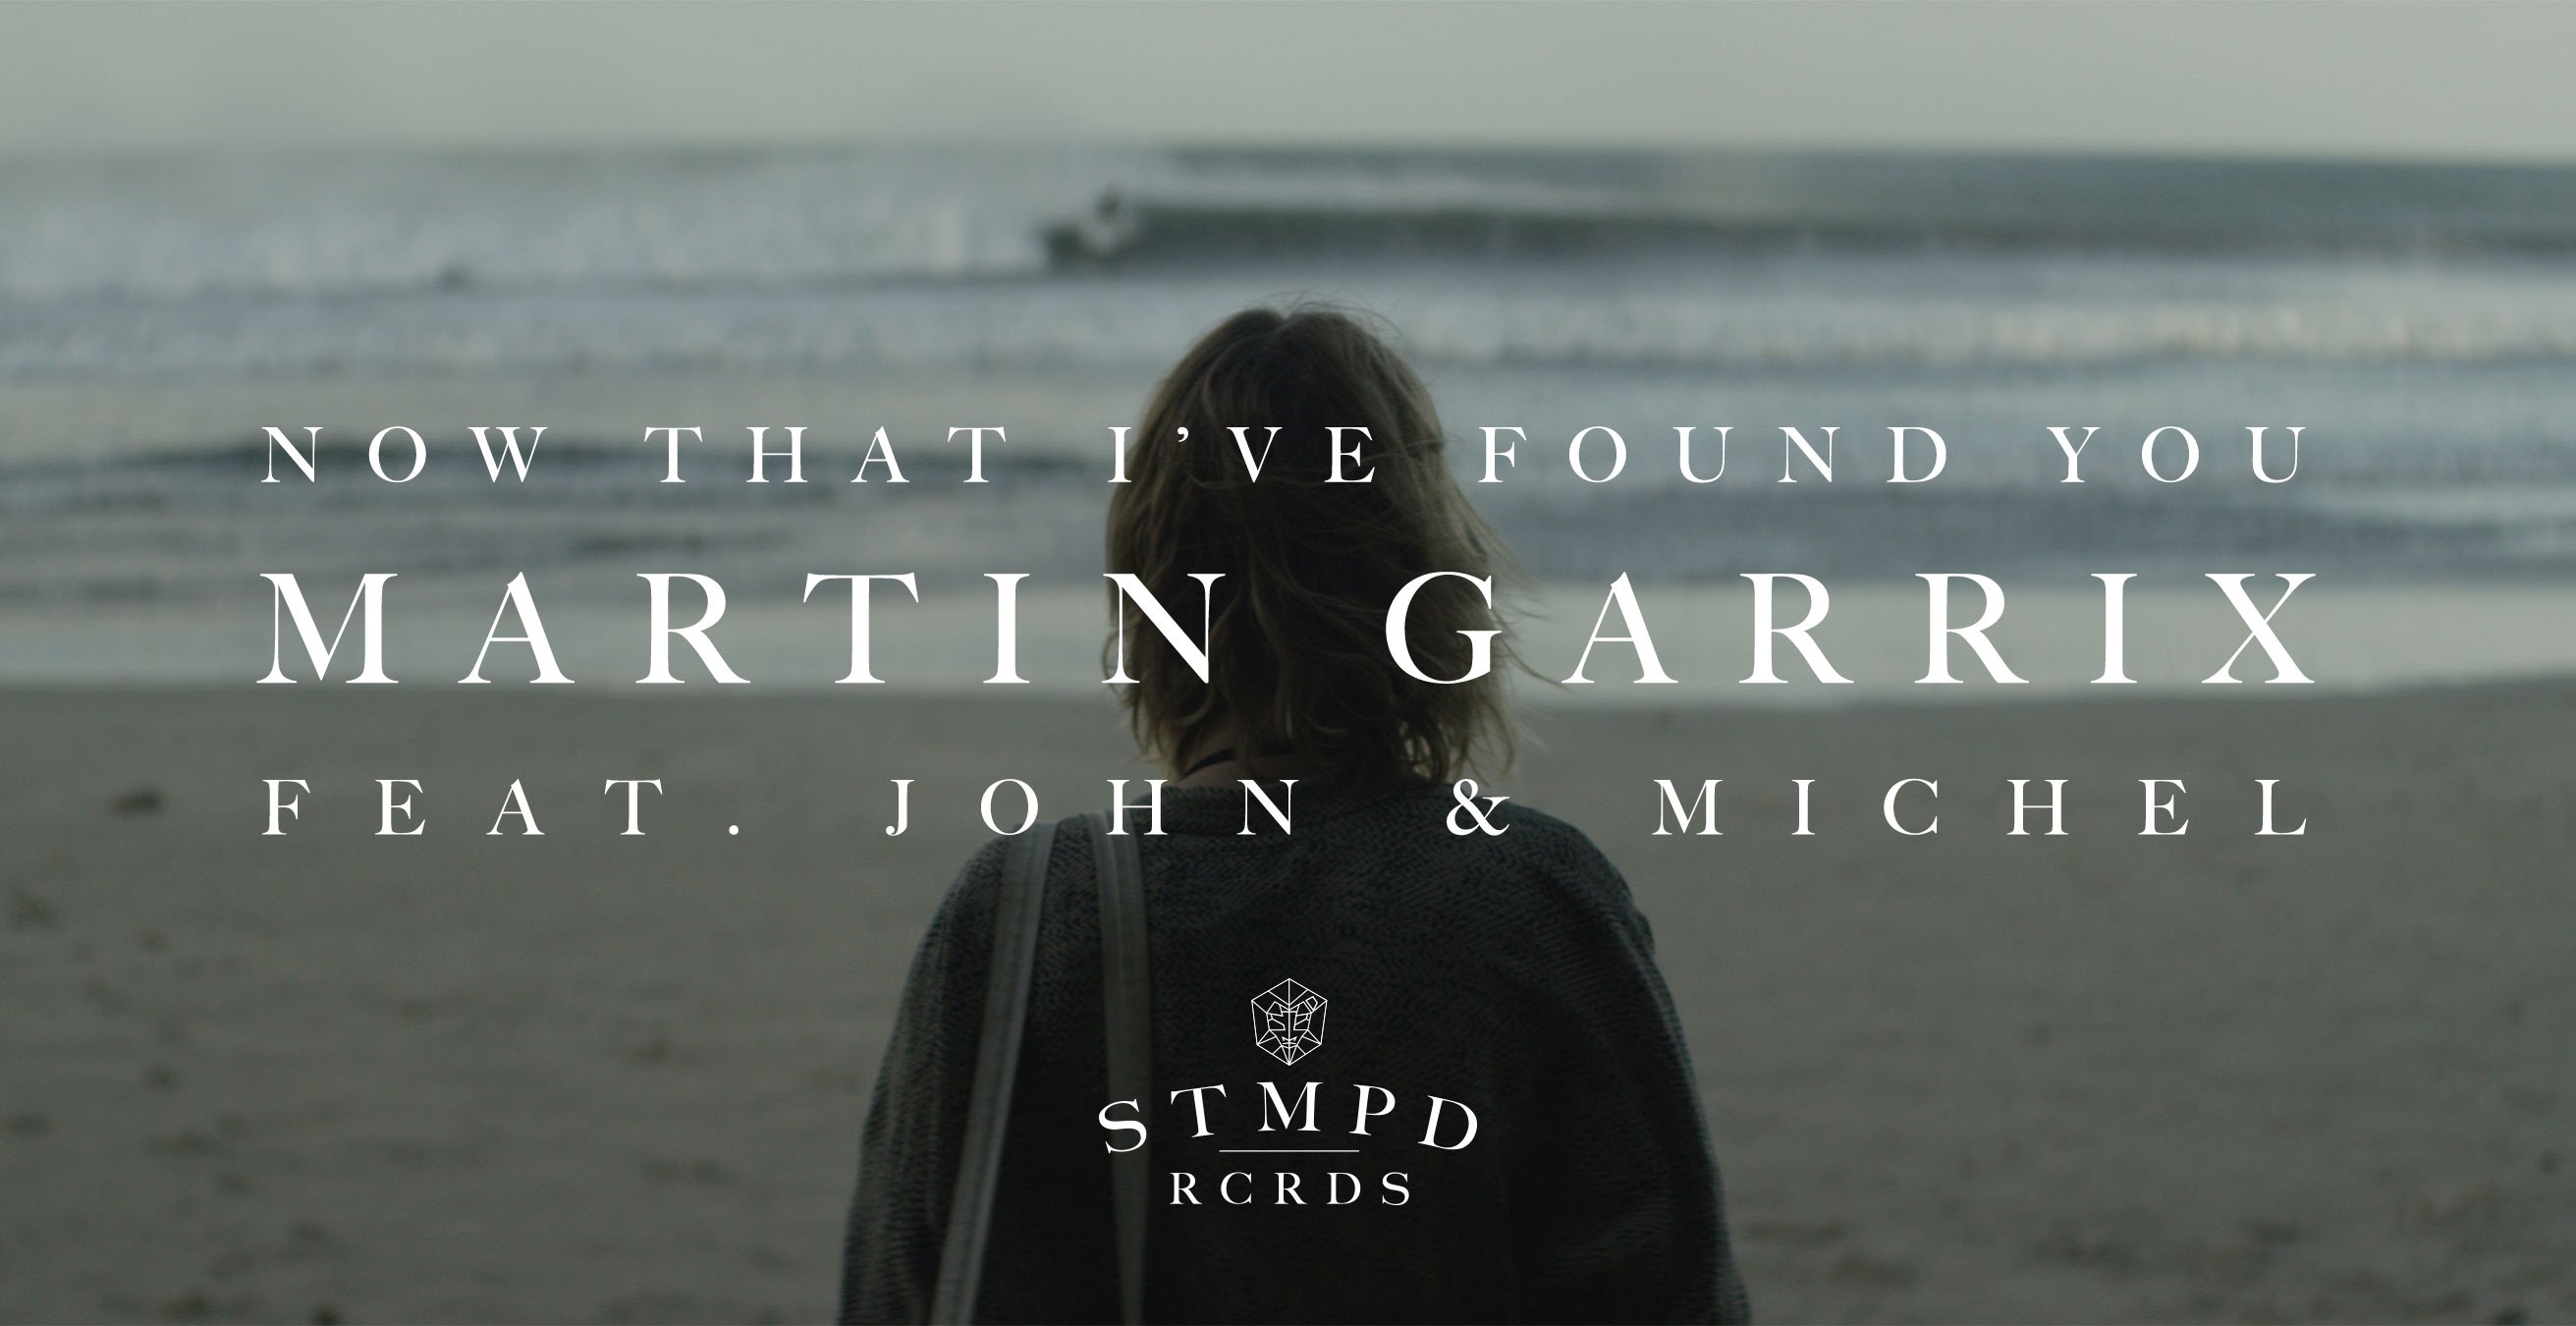 Martin Garrix – Now That I’ve Found You feat. John Martin & Michel Zitron